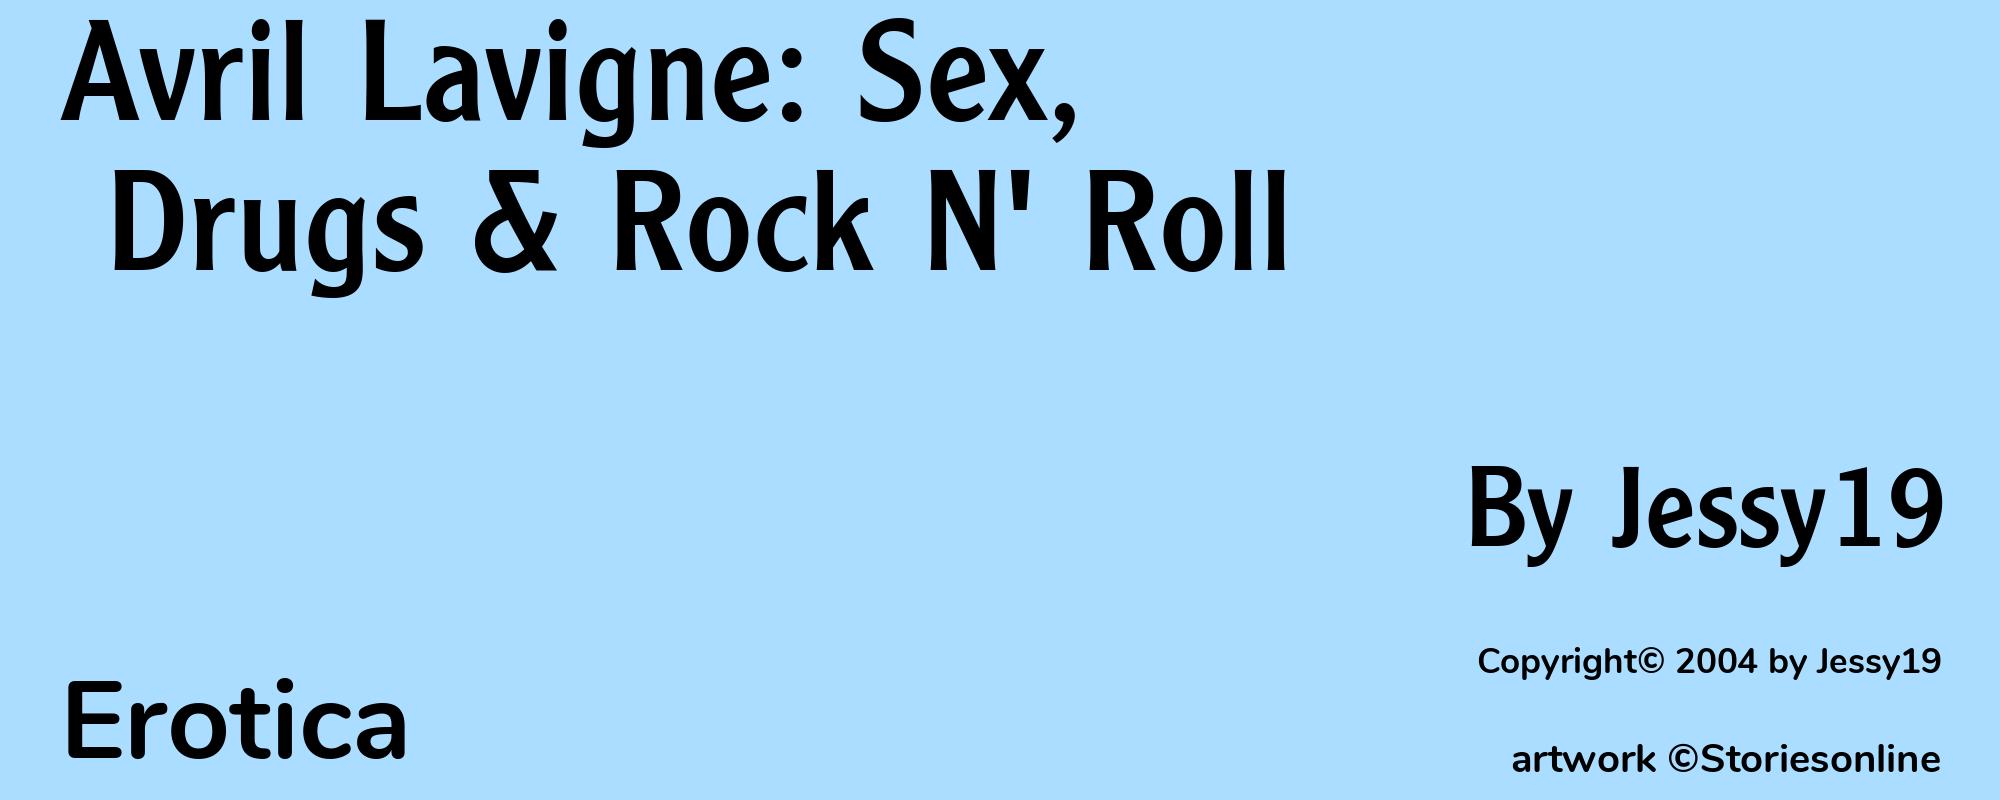 Avril Lavigne: Sex, Drugs & Rock N' Roll - Cover